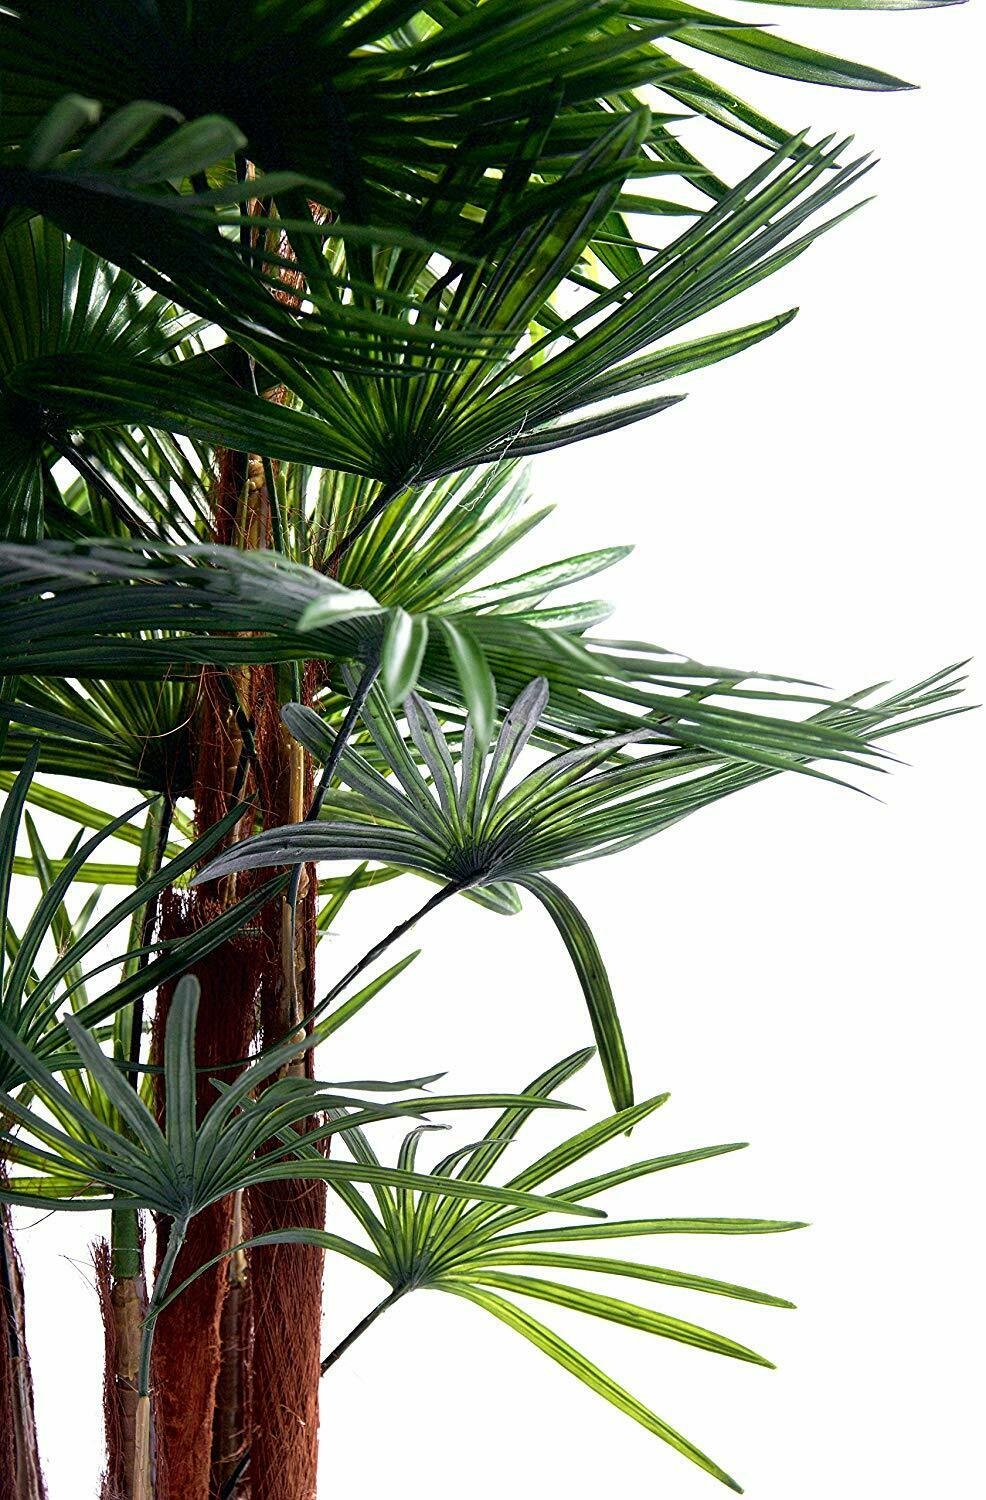 Best Artificial 3ft - 90cm Spider Finger Palm Tree